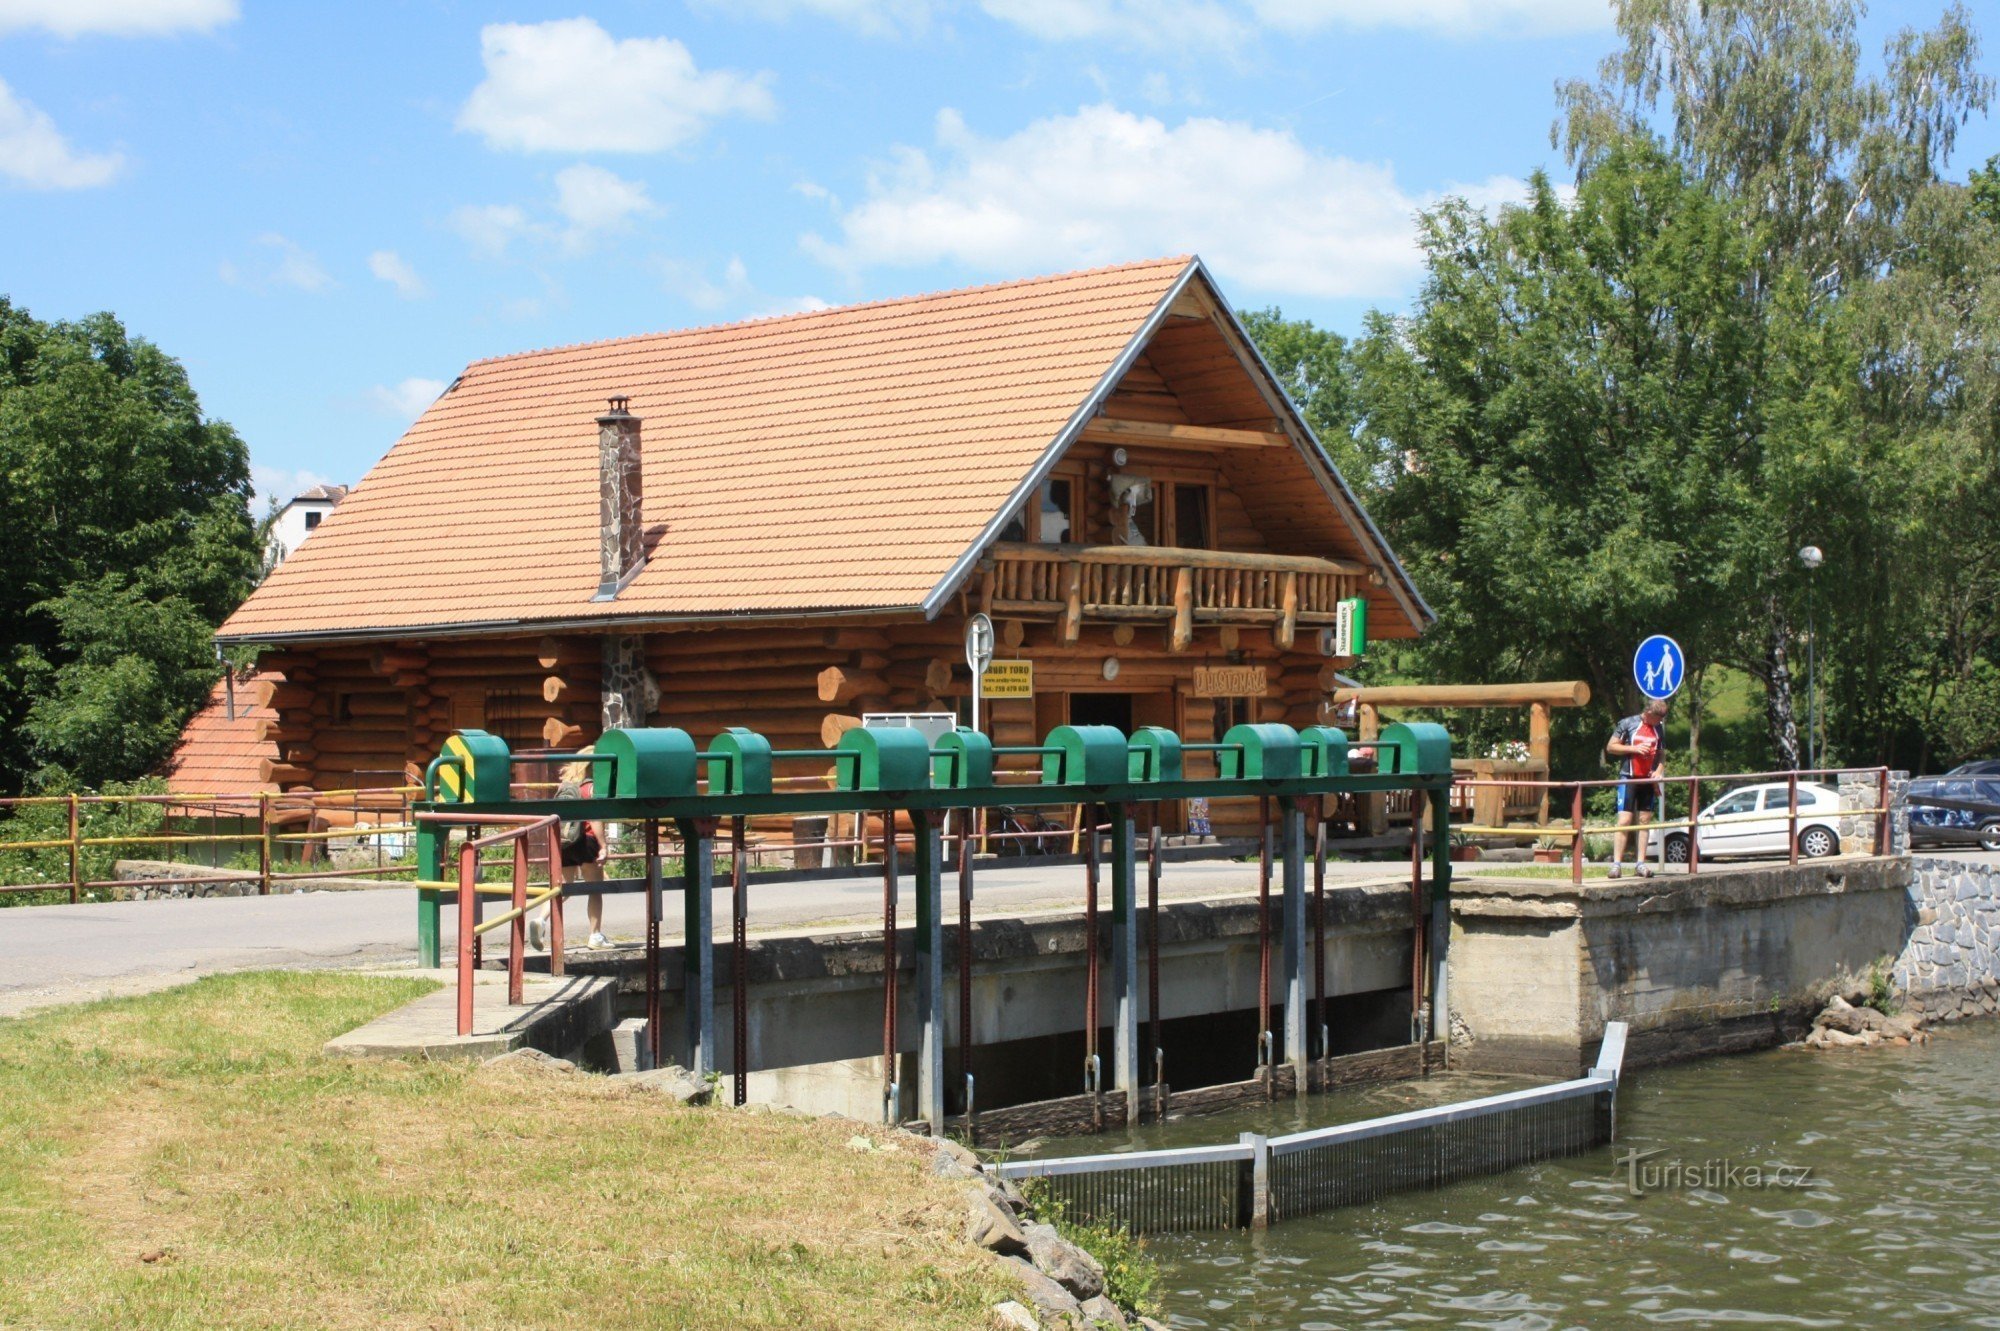 Olšovec池の水門のそばに立っています